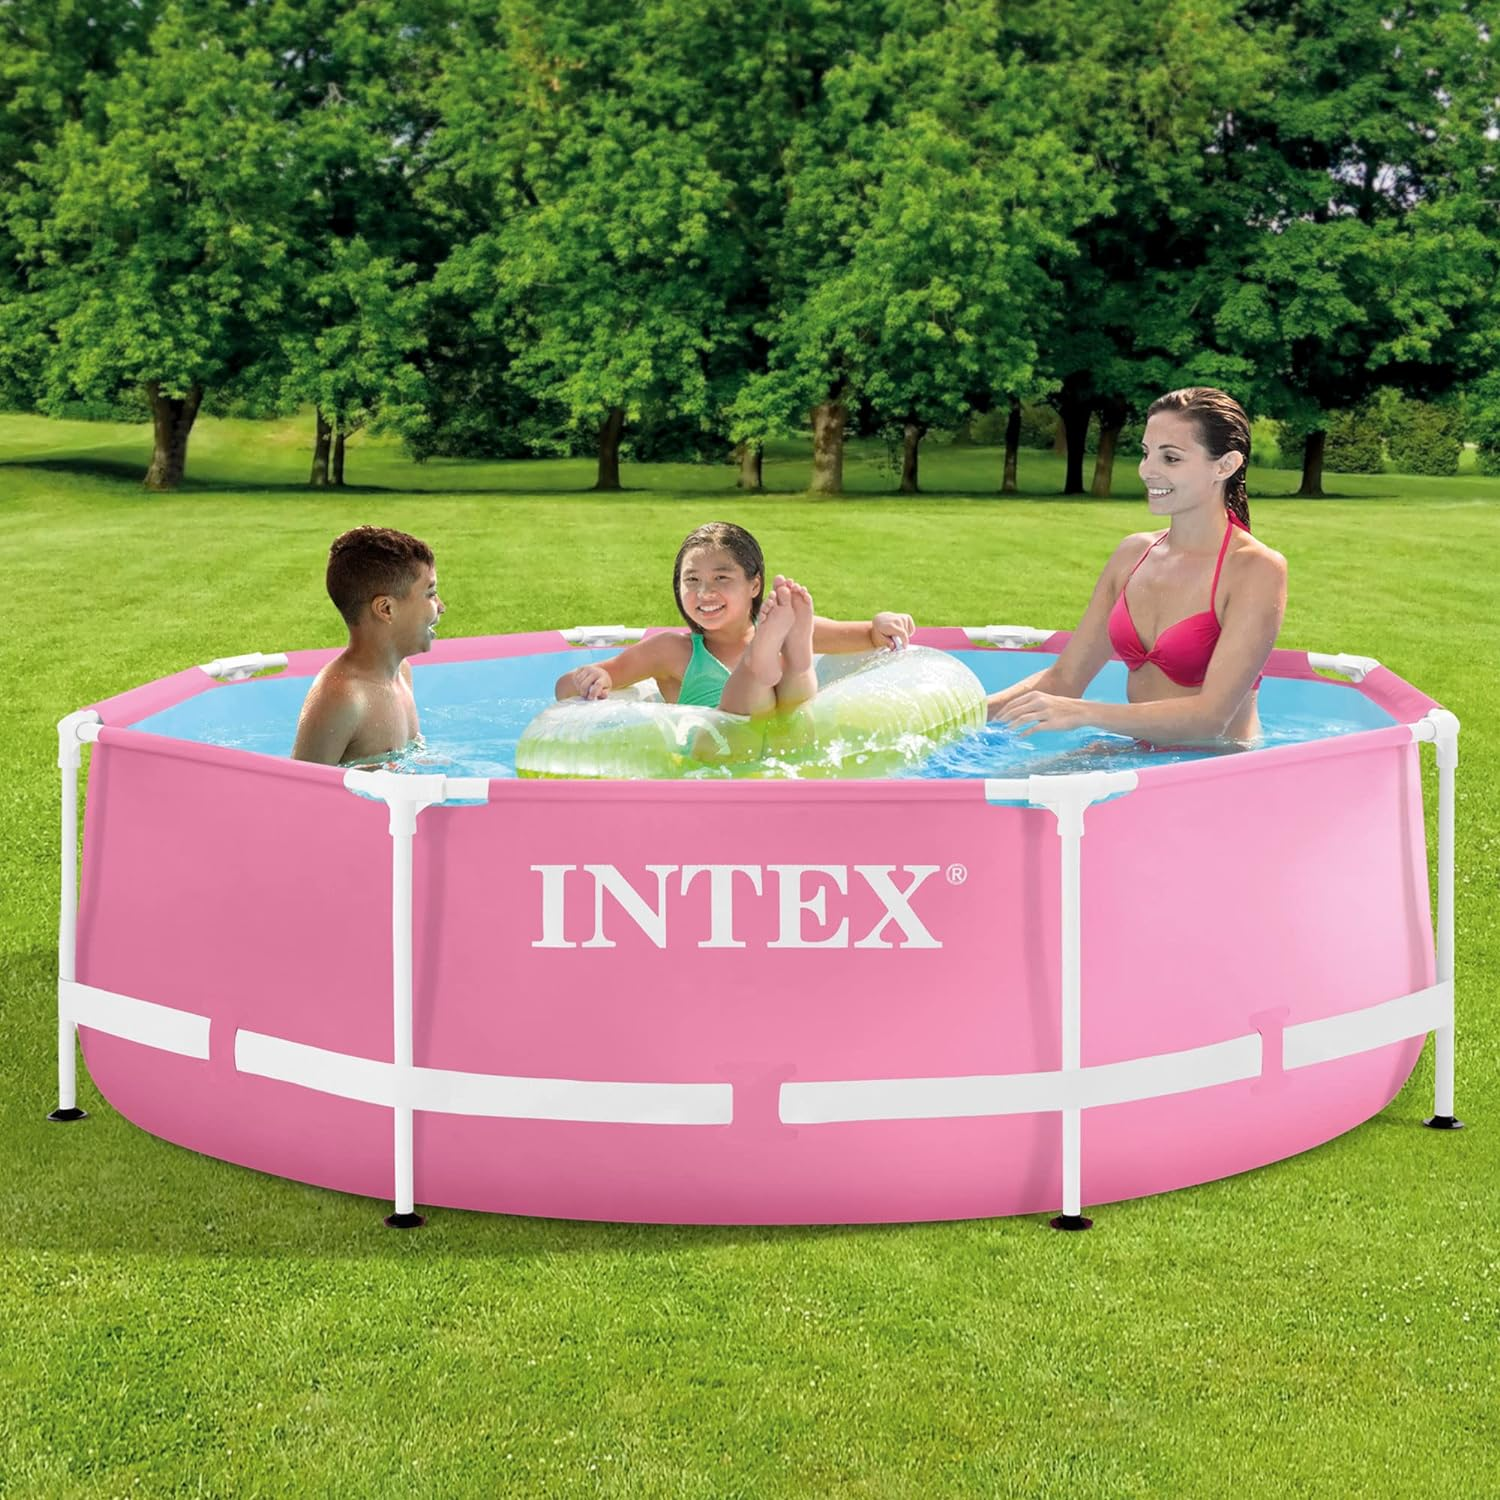 (244x76cm) - Frame INTEX Pink Pool pink Swimmingpool, Metal 28290NP